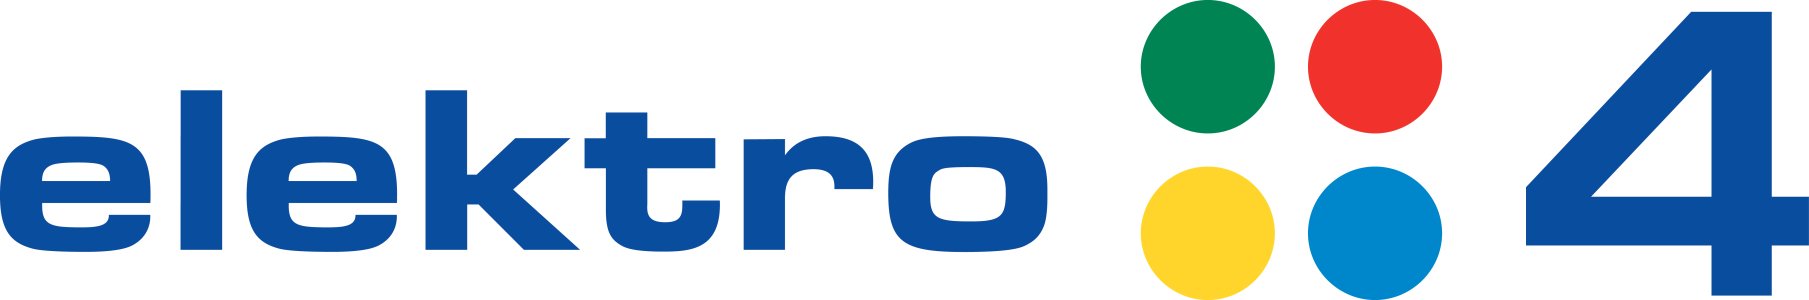 elektro_4_logo-png